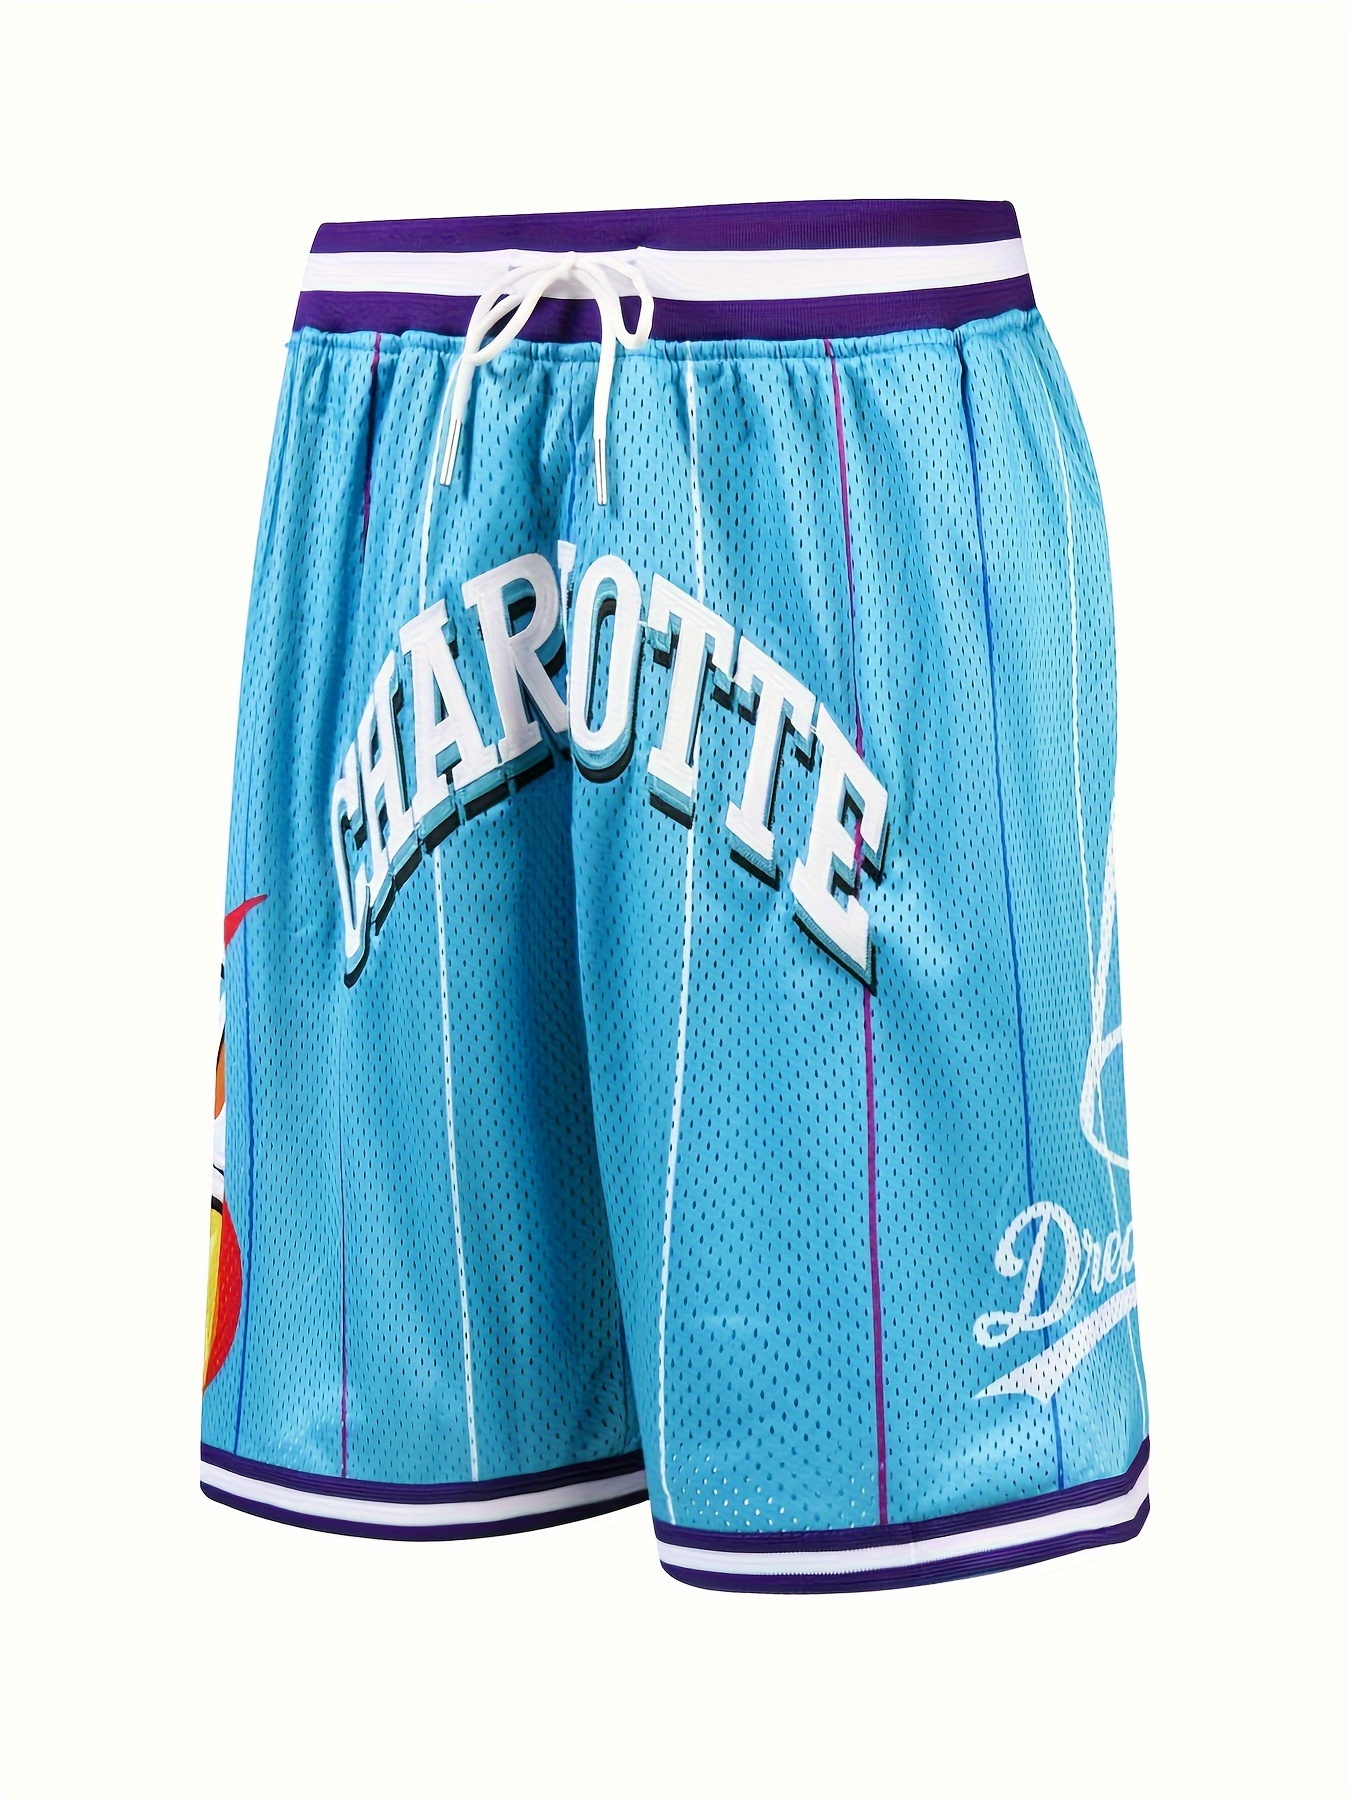 USA size Mens Basketball Shorts 8 24 Retro Mesh Embroidered Pockets Fans  Shorts